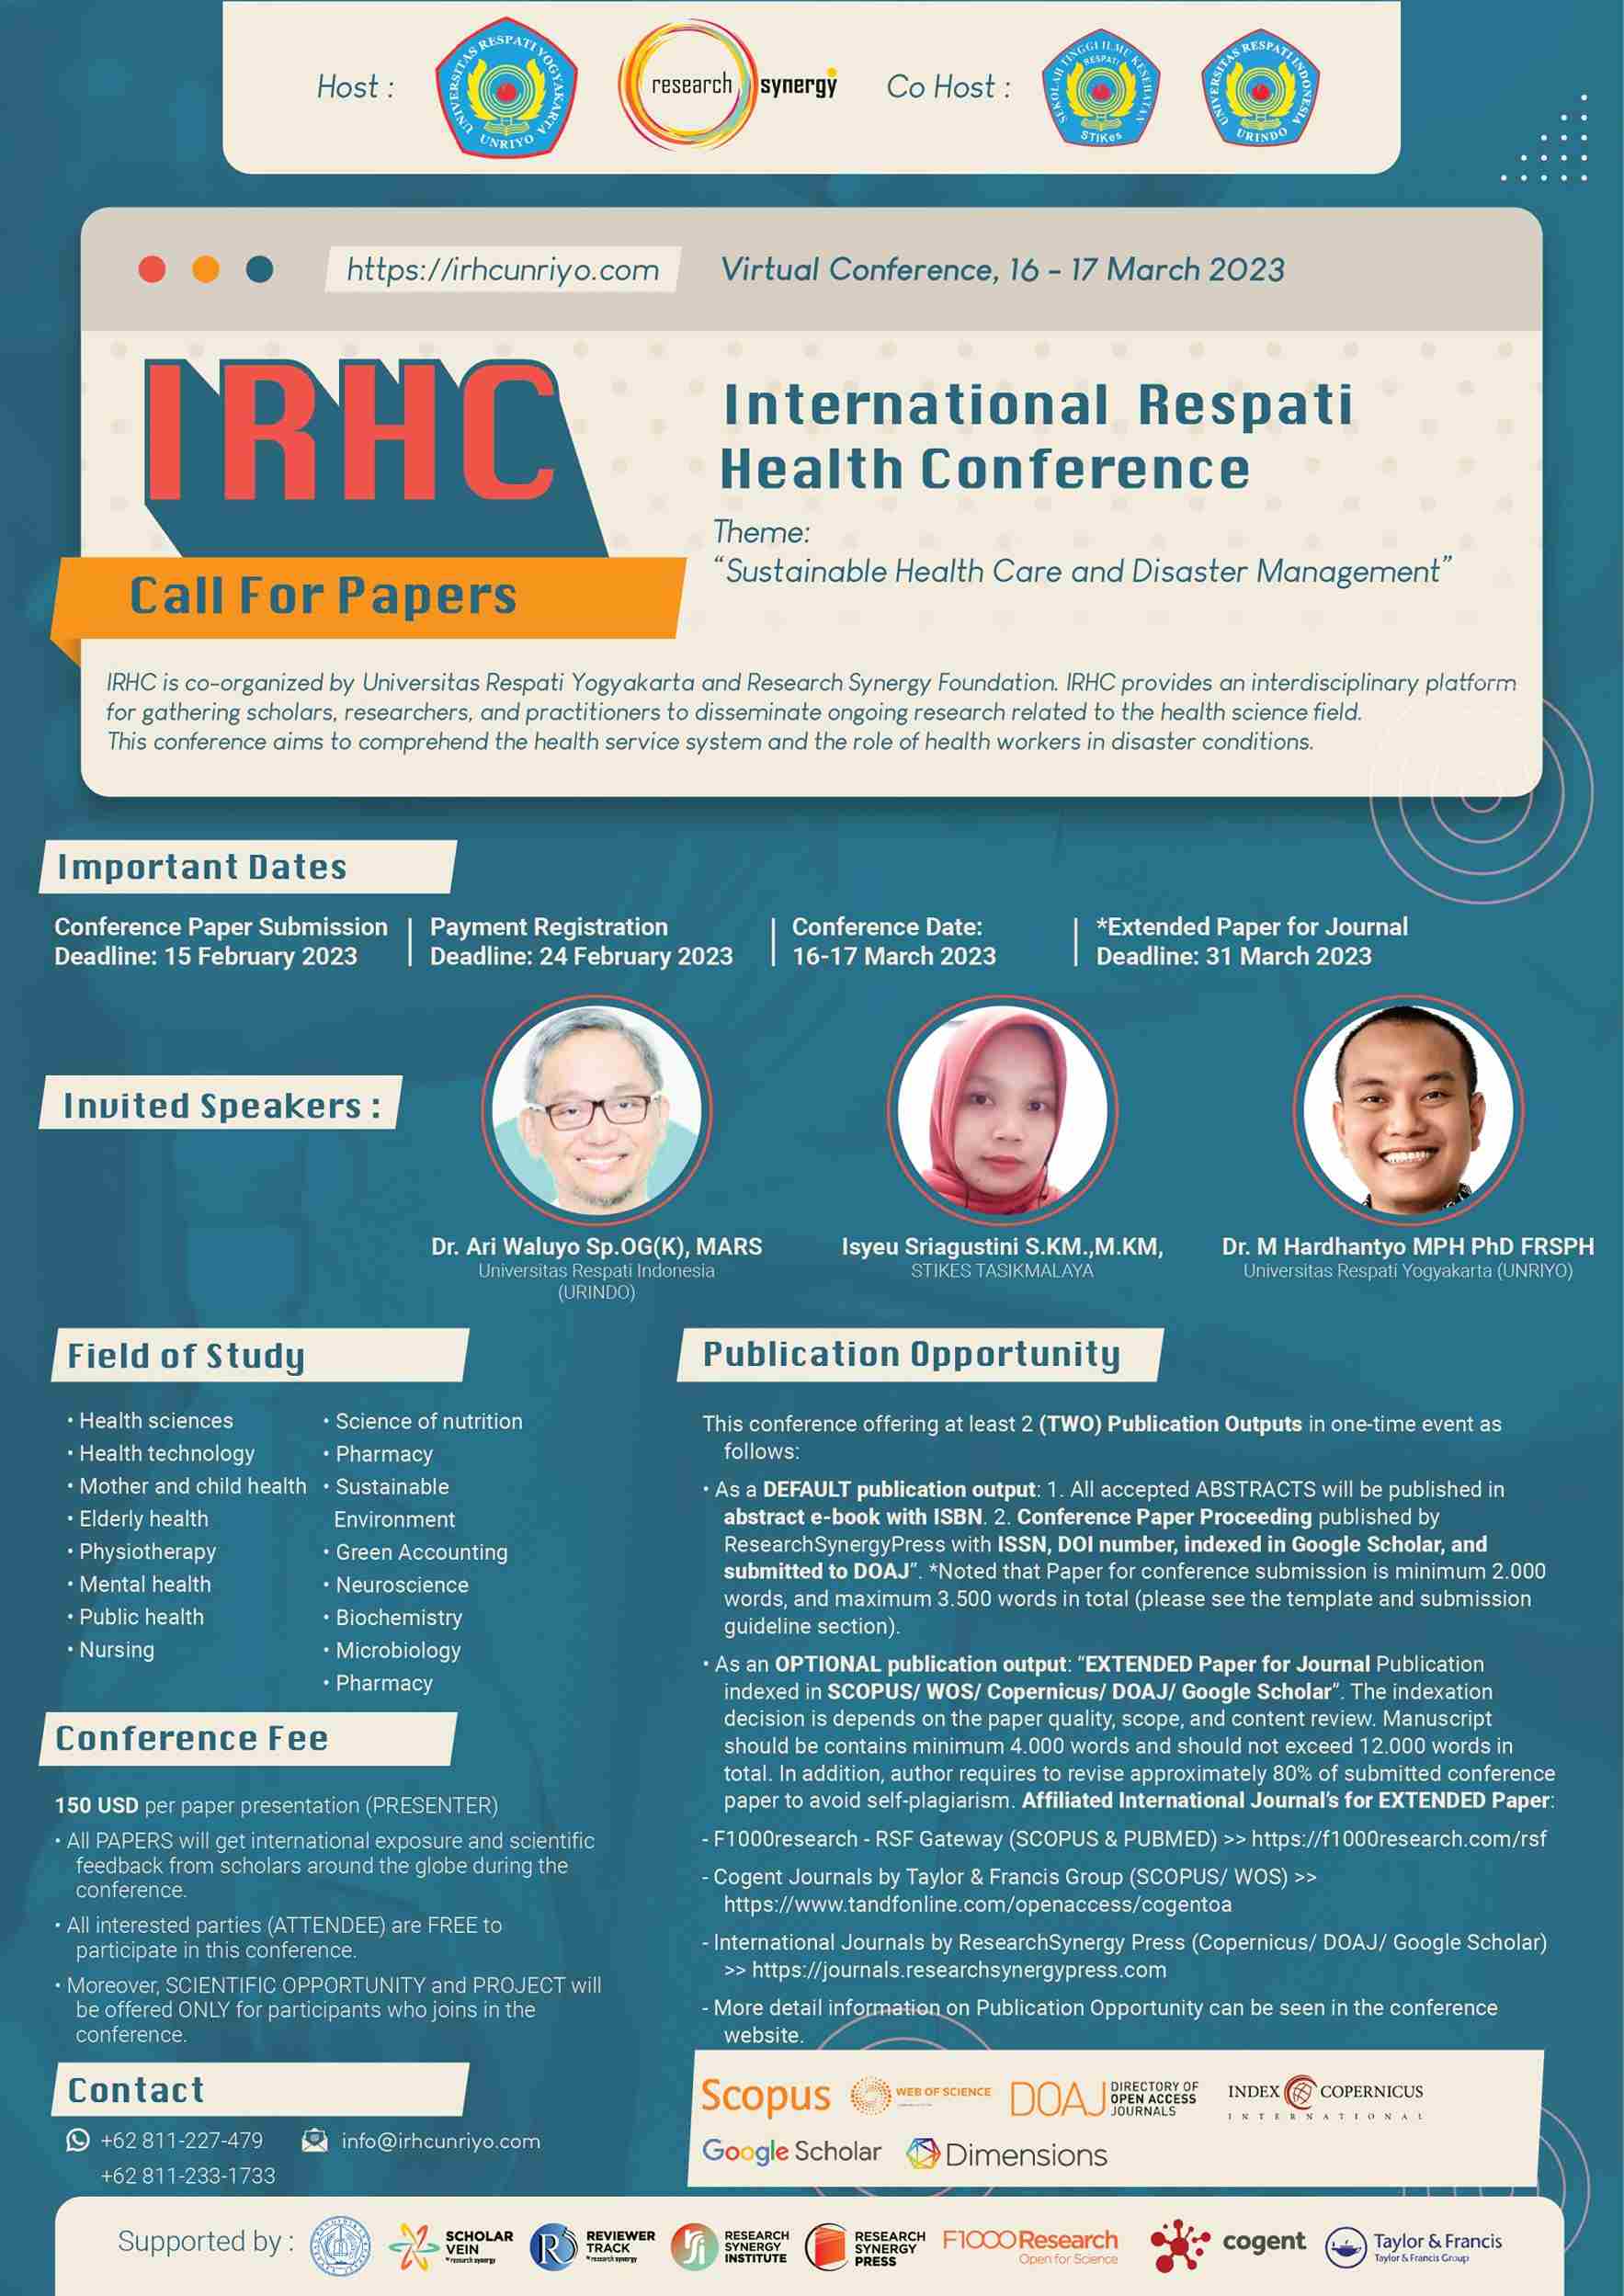 International Respati Health Conference (IRHC)